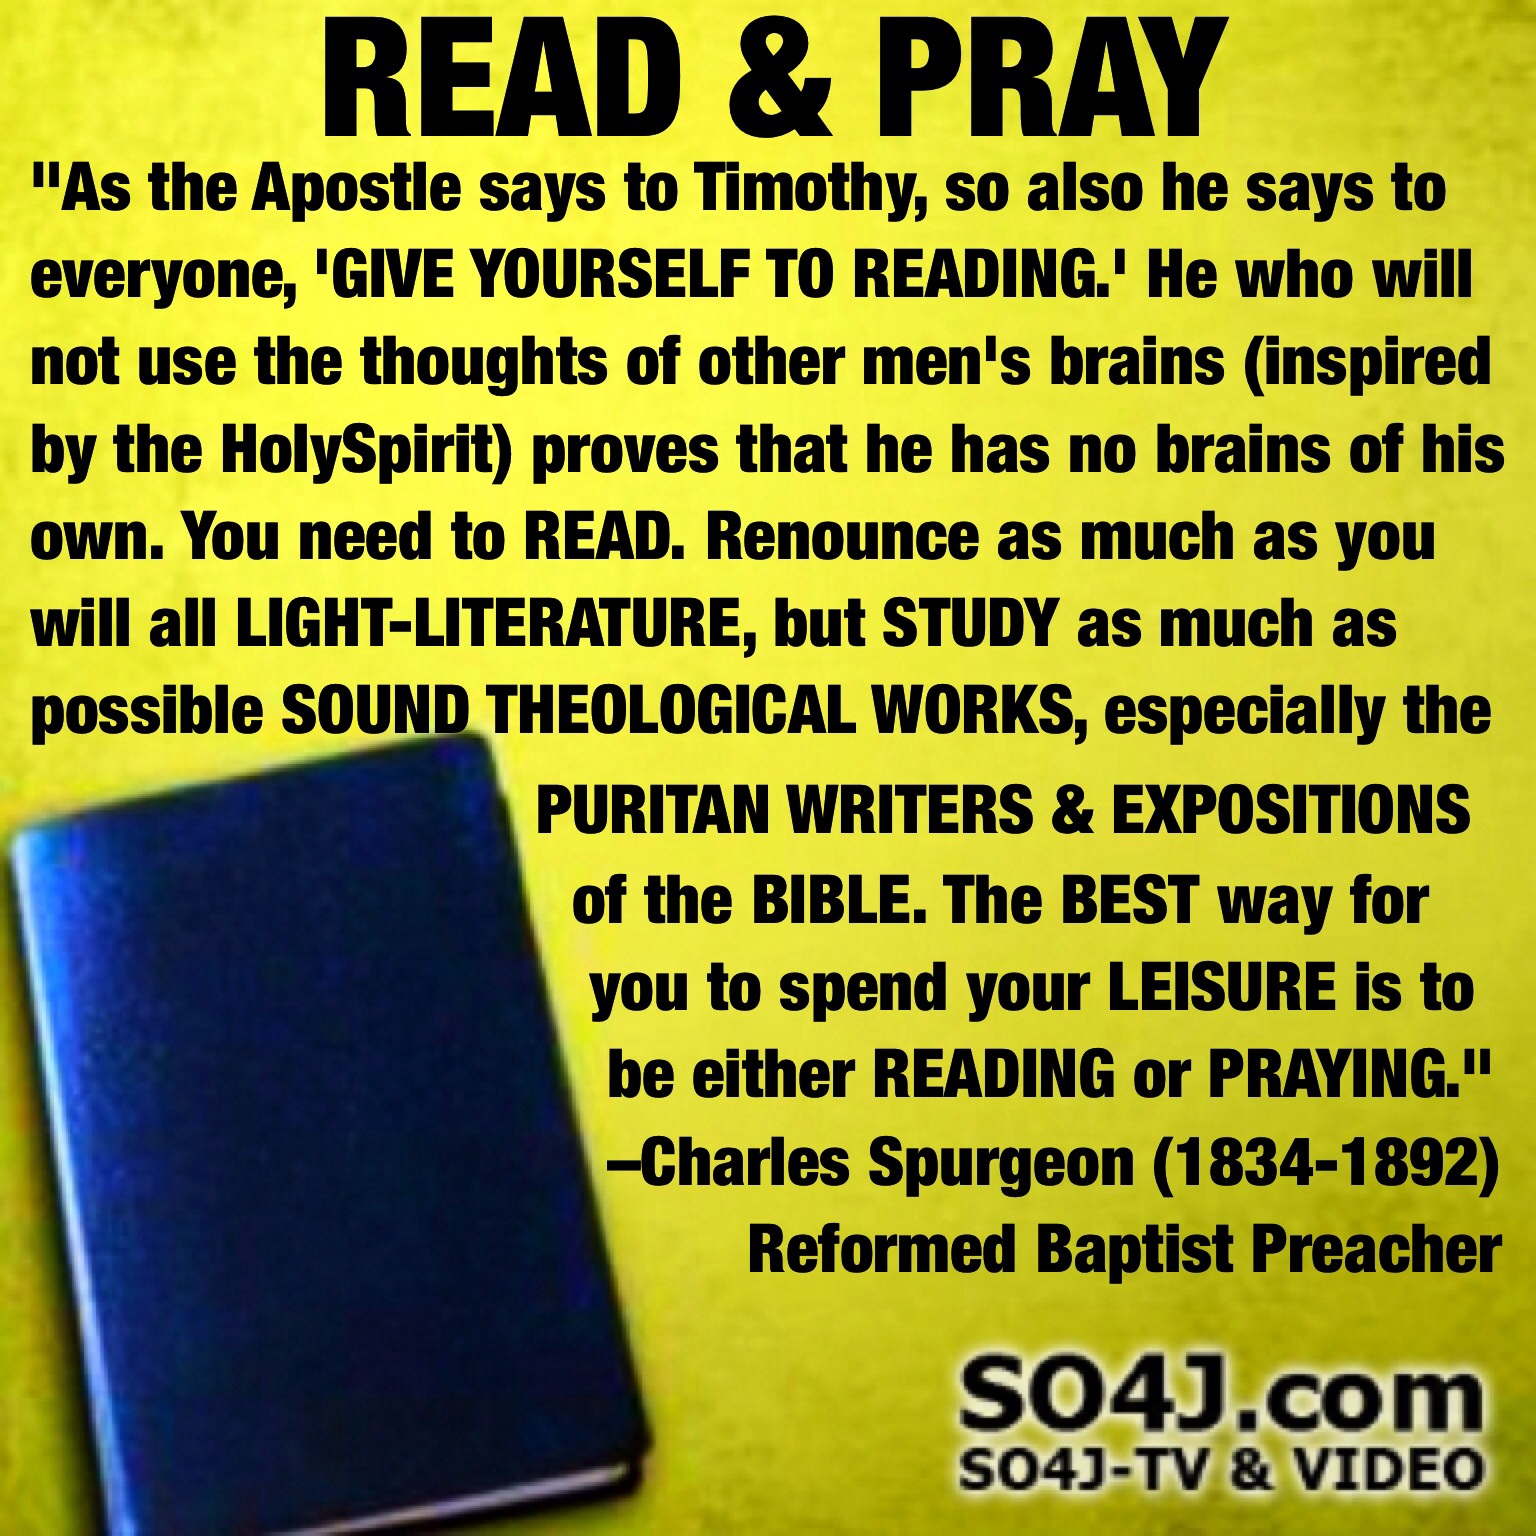 Read & Pray - Charles Spurgeon Quote - SO4J-TV - SO4J.com